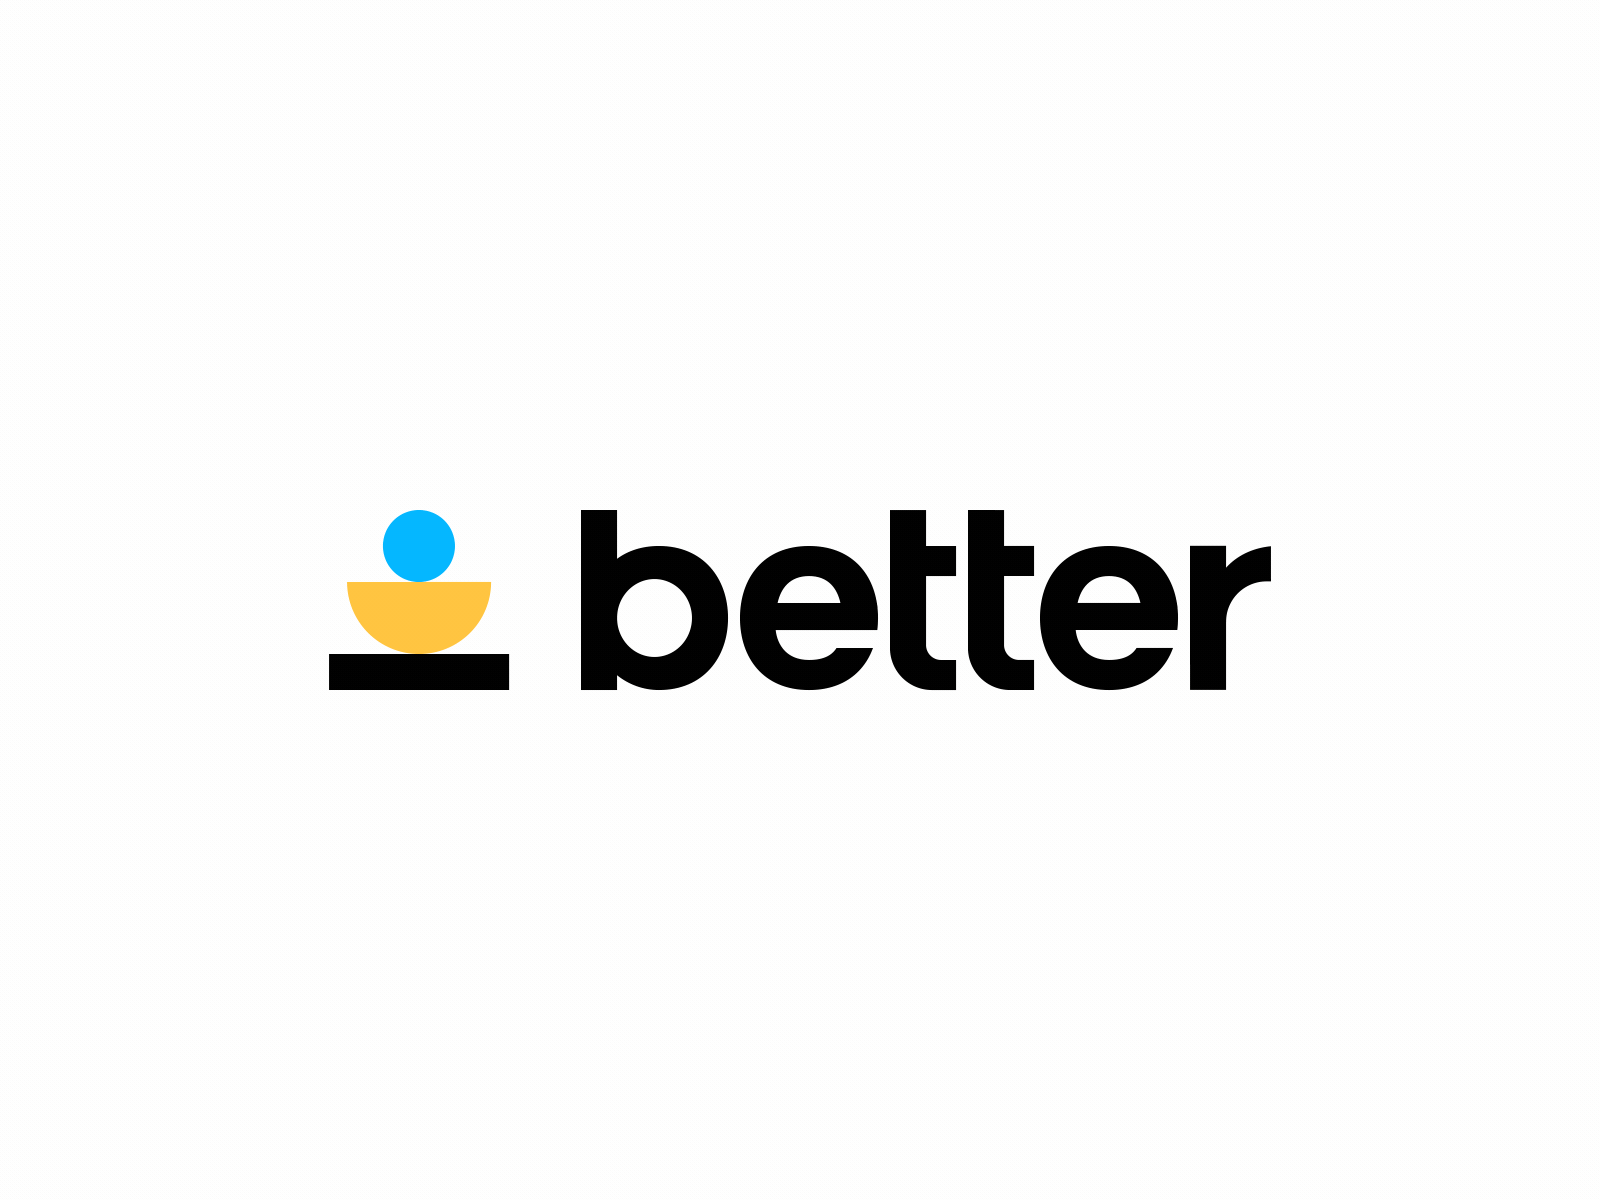 Better Logo Animation By Alex Gorbunov On Dribbble